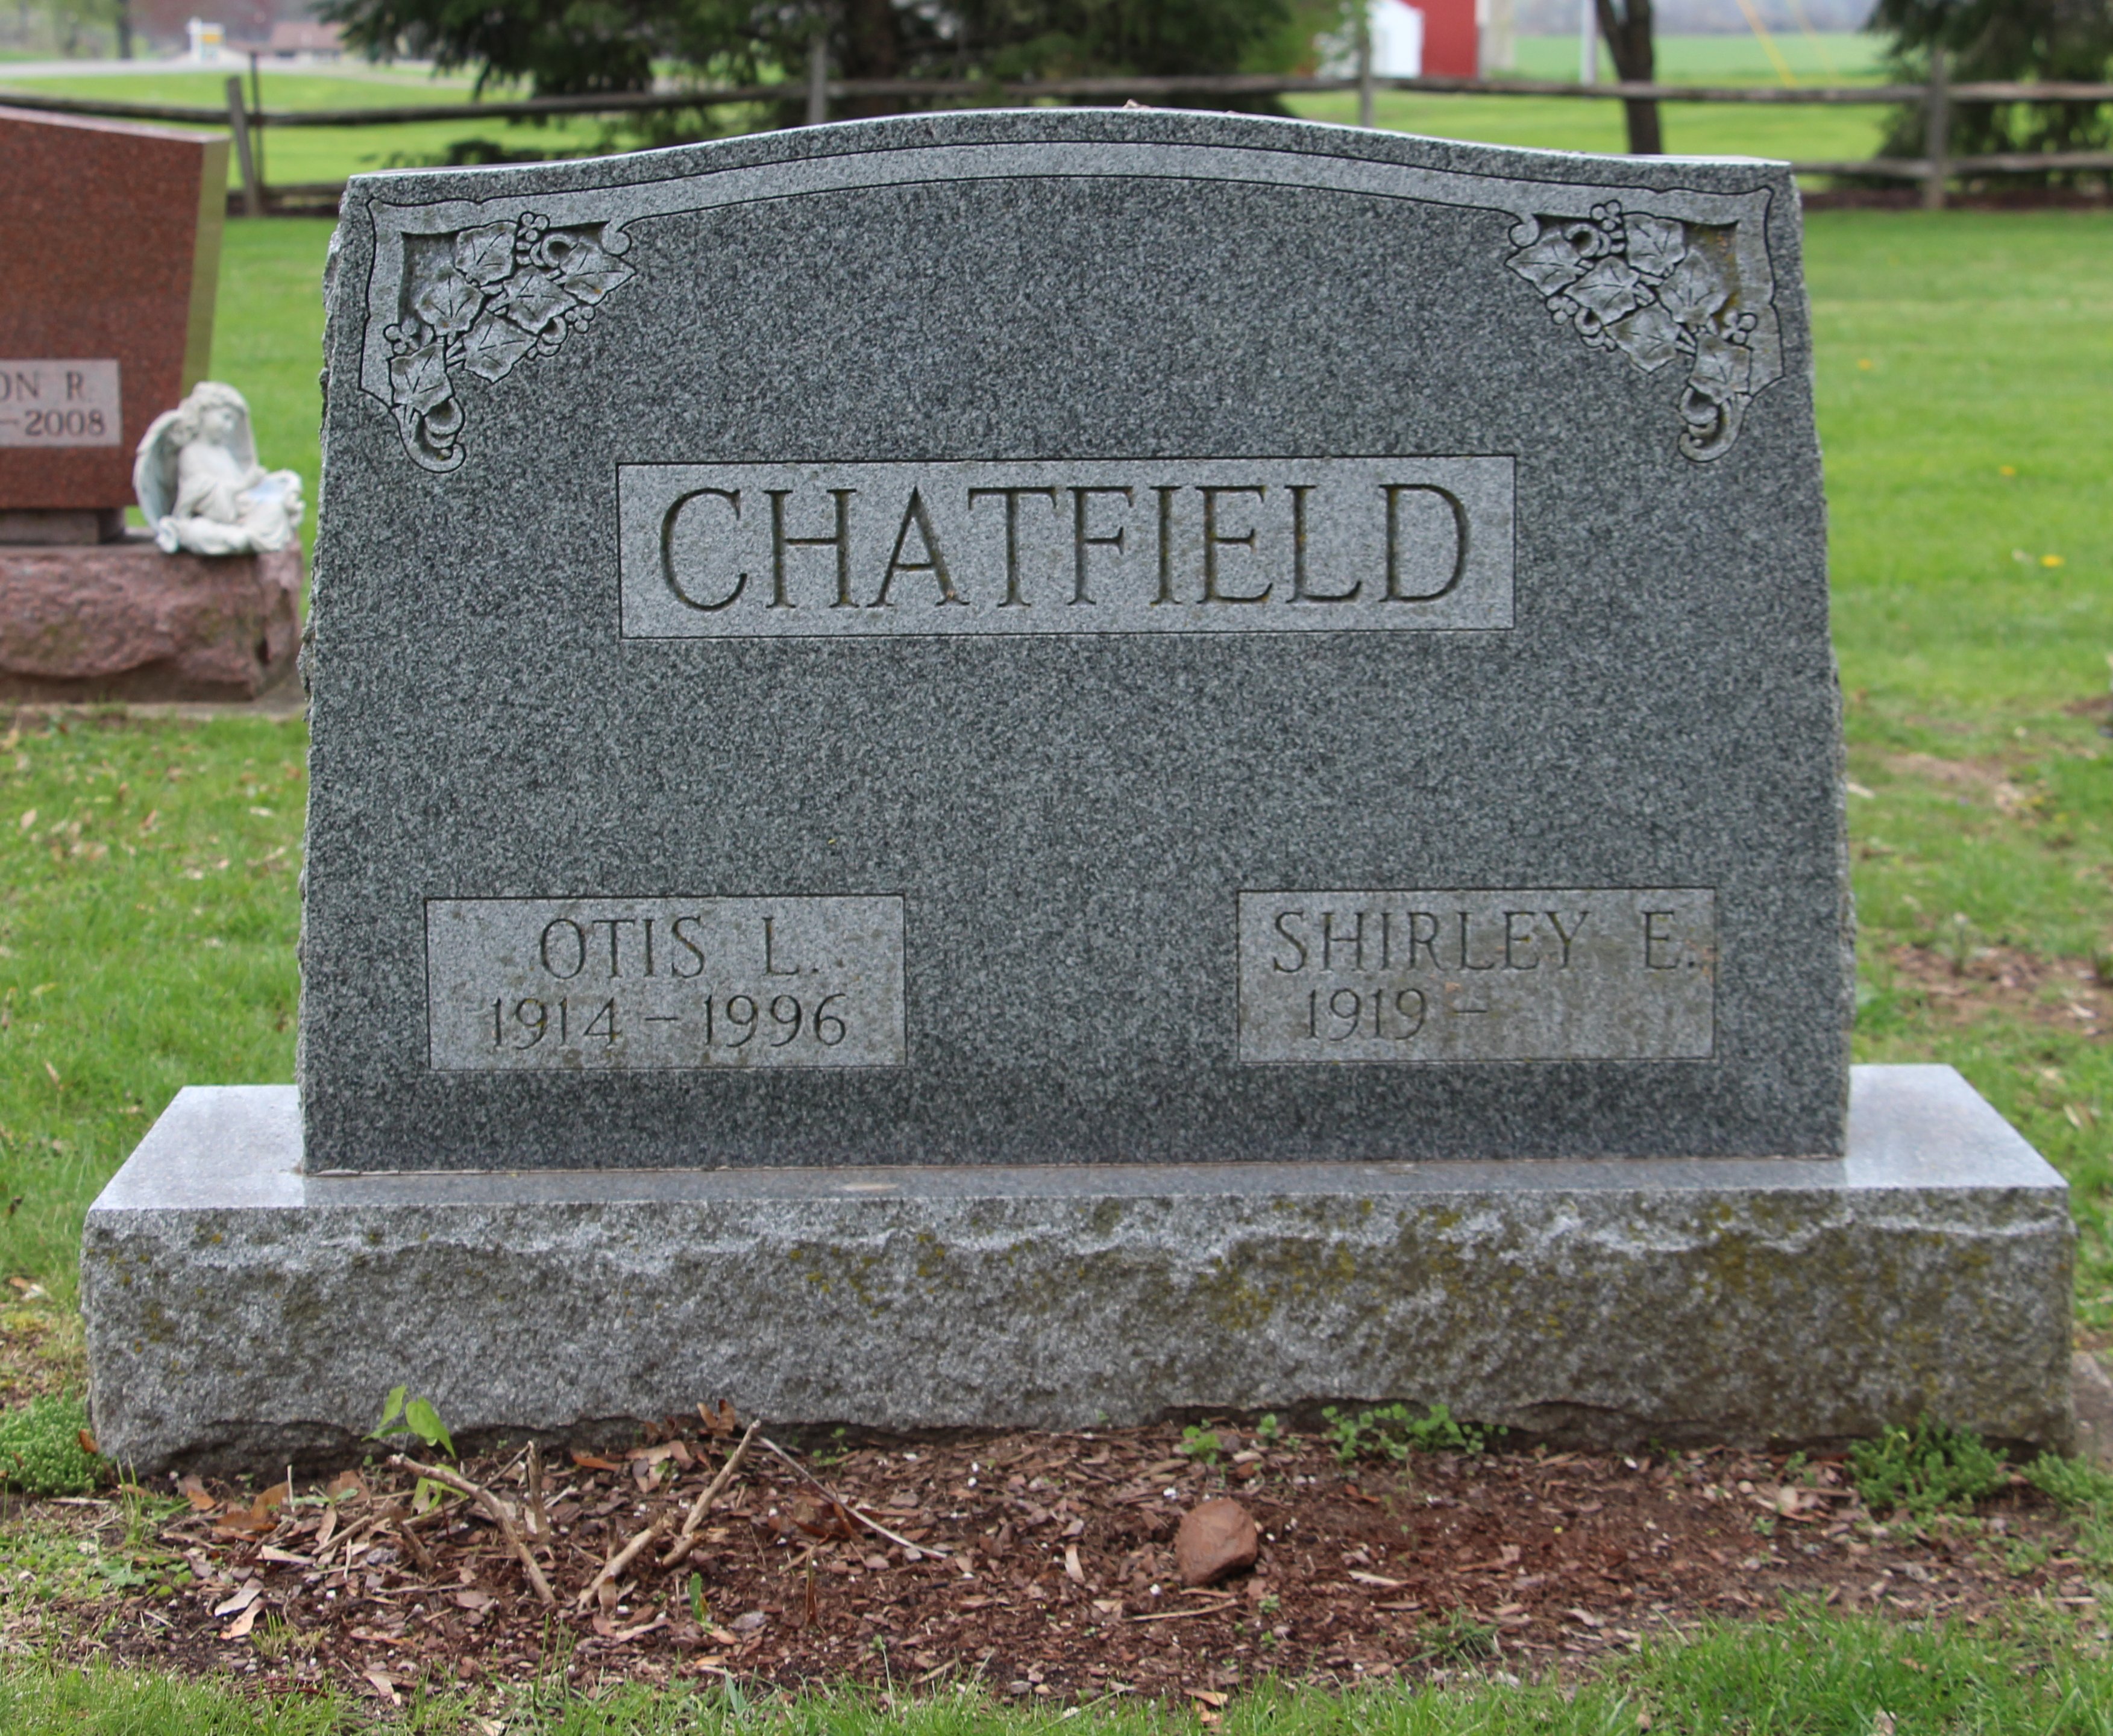 CHATFIELD Otis Lavern 1914-1996 grave.jpg